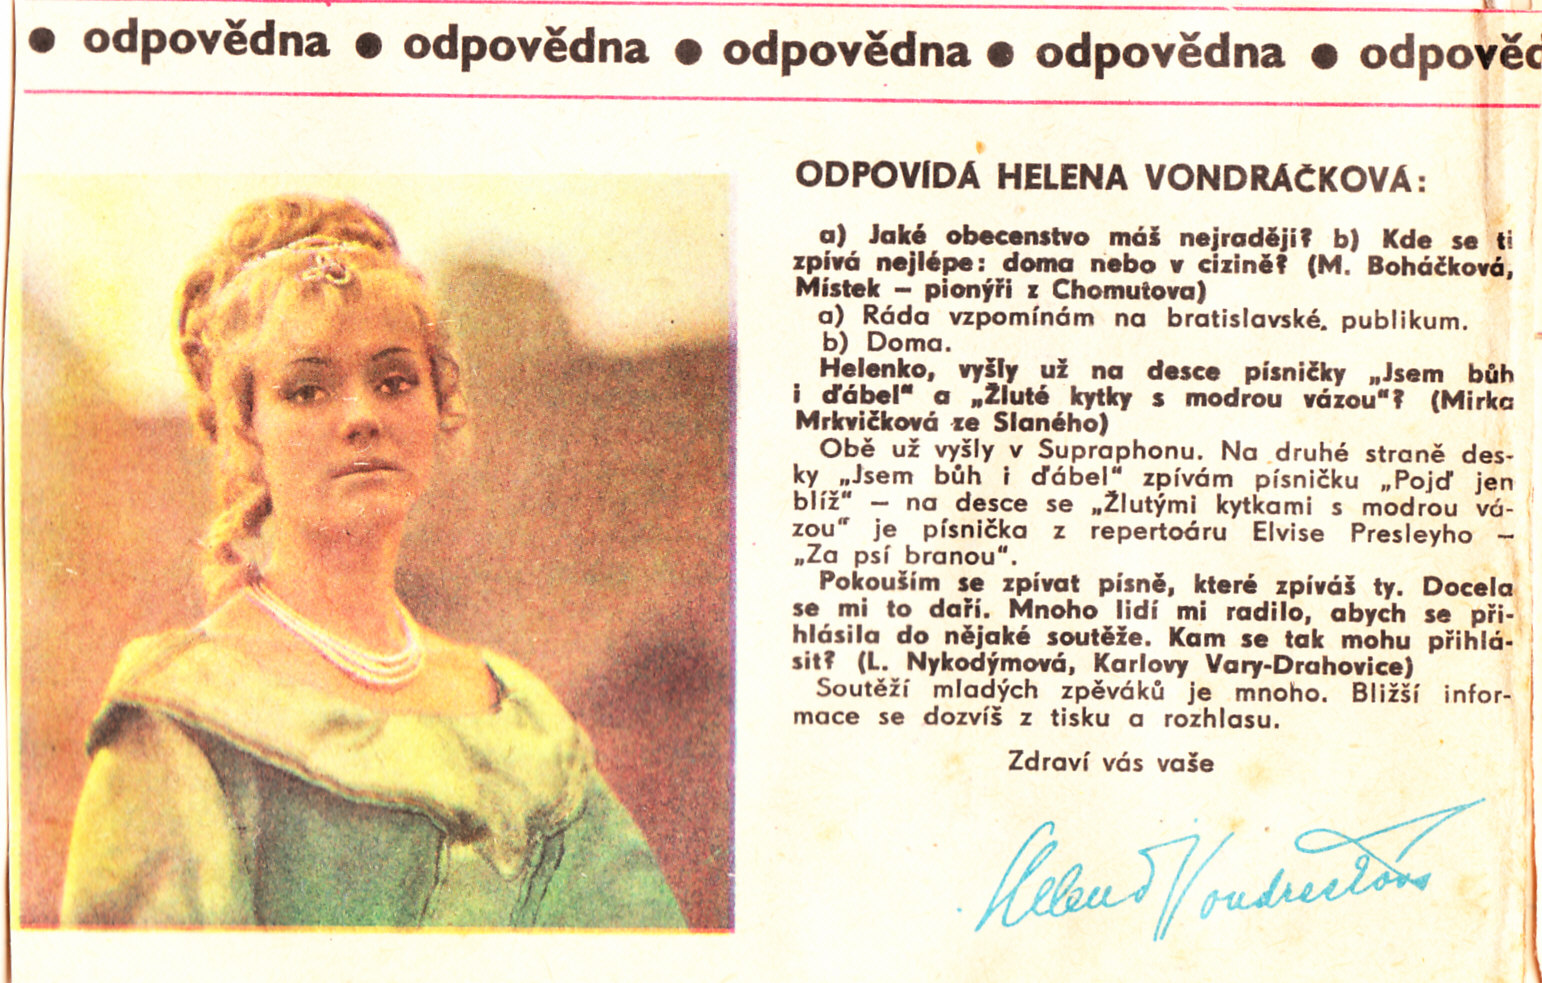 1970, Sedmička-odpovědna e.jpg